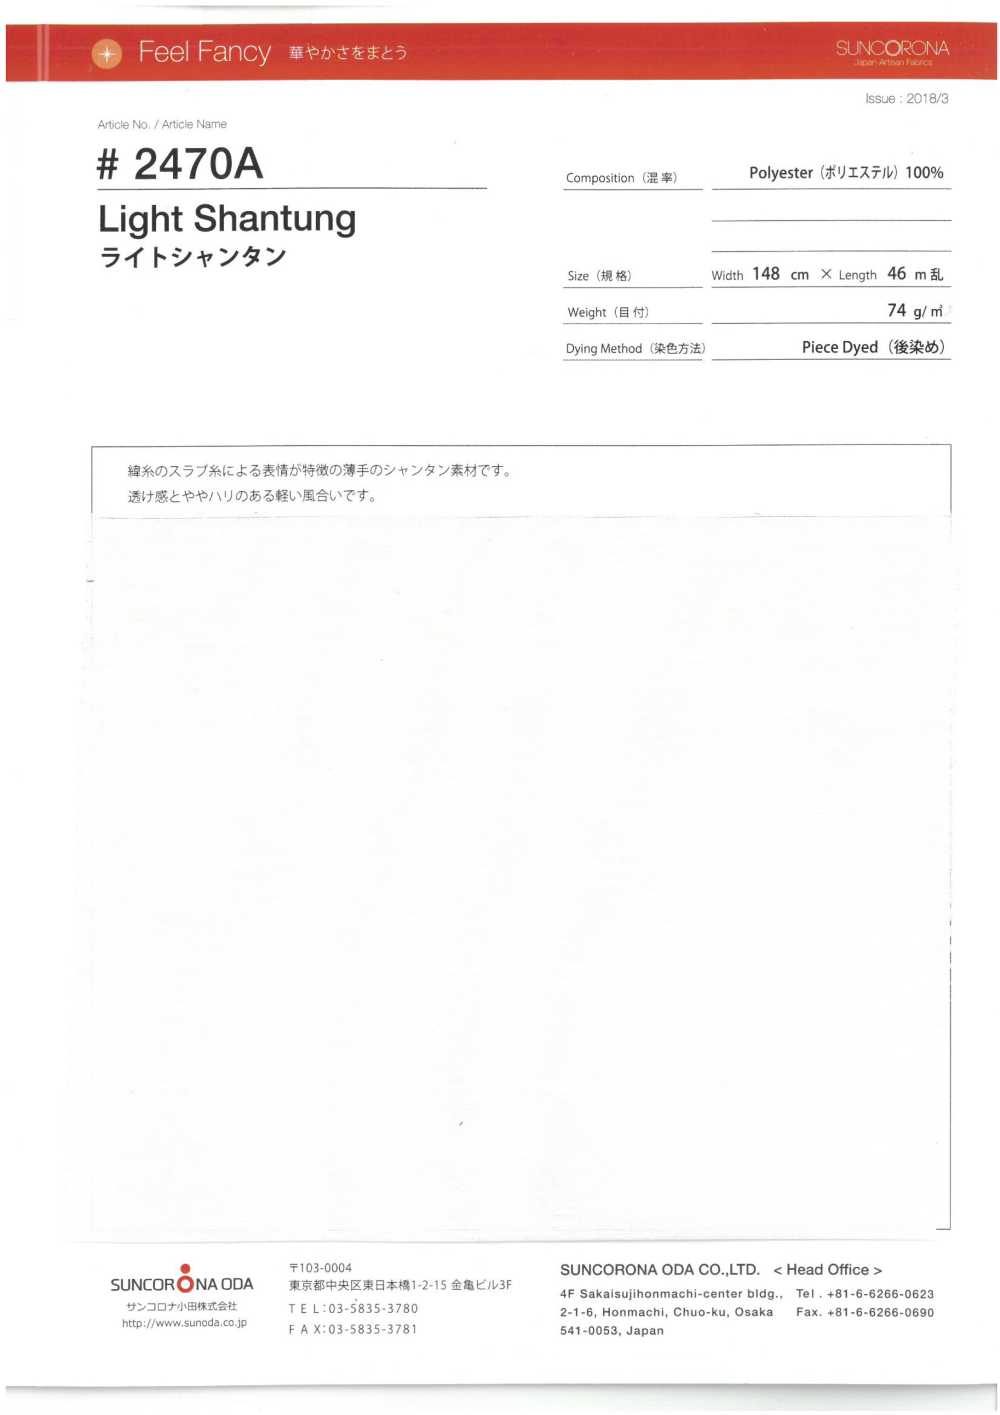 2470A Light Shantung[Textile / Fabric] Suncorona Oda